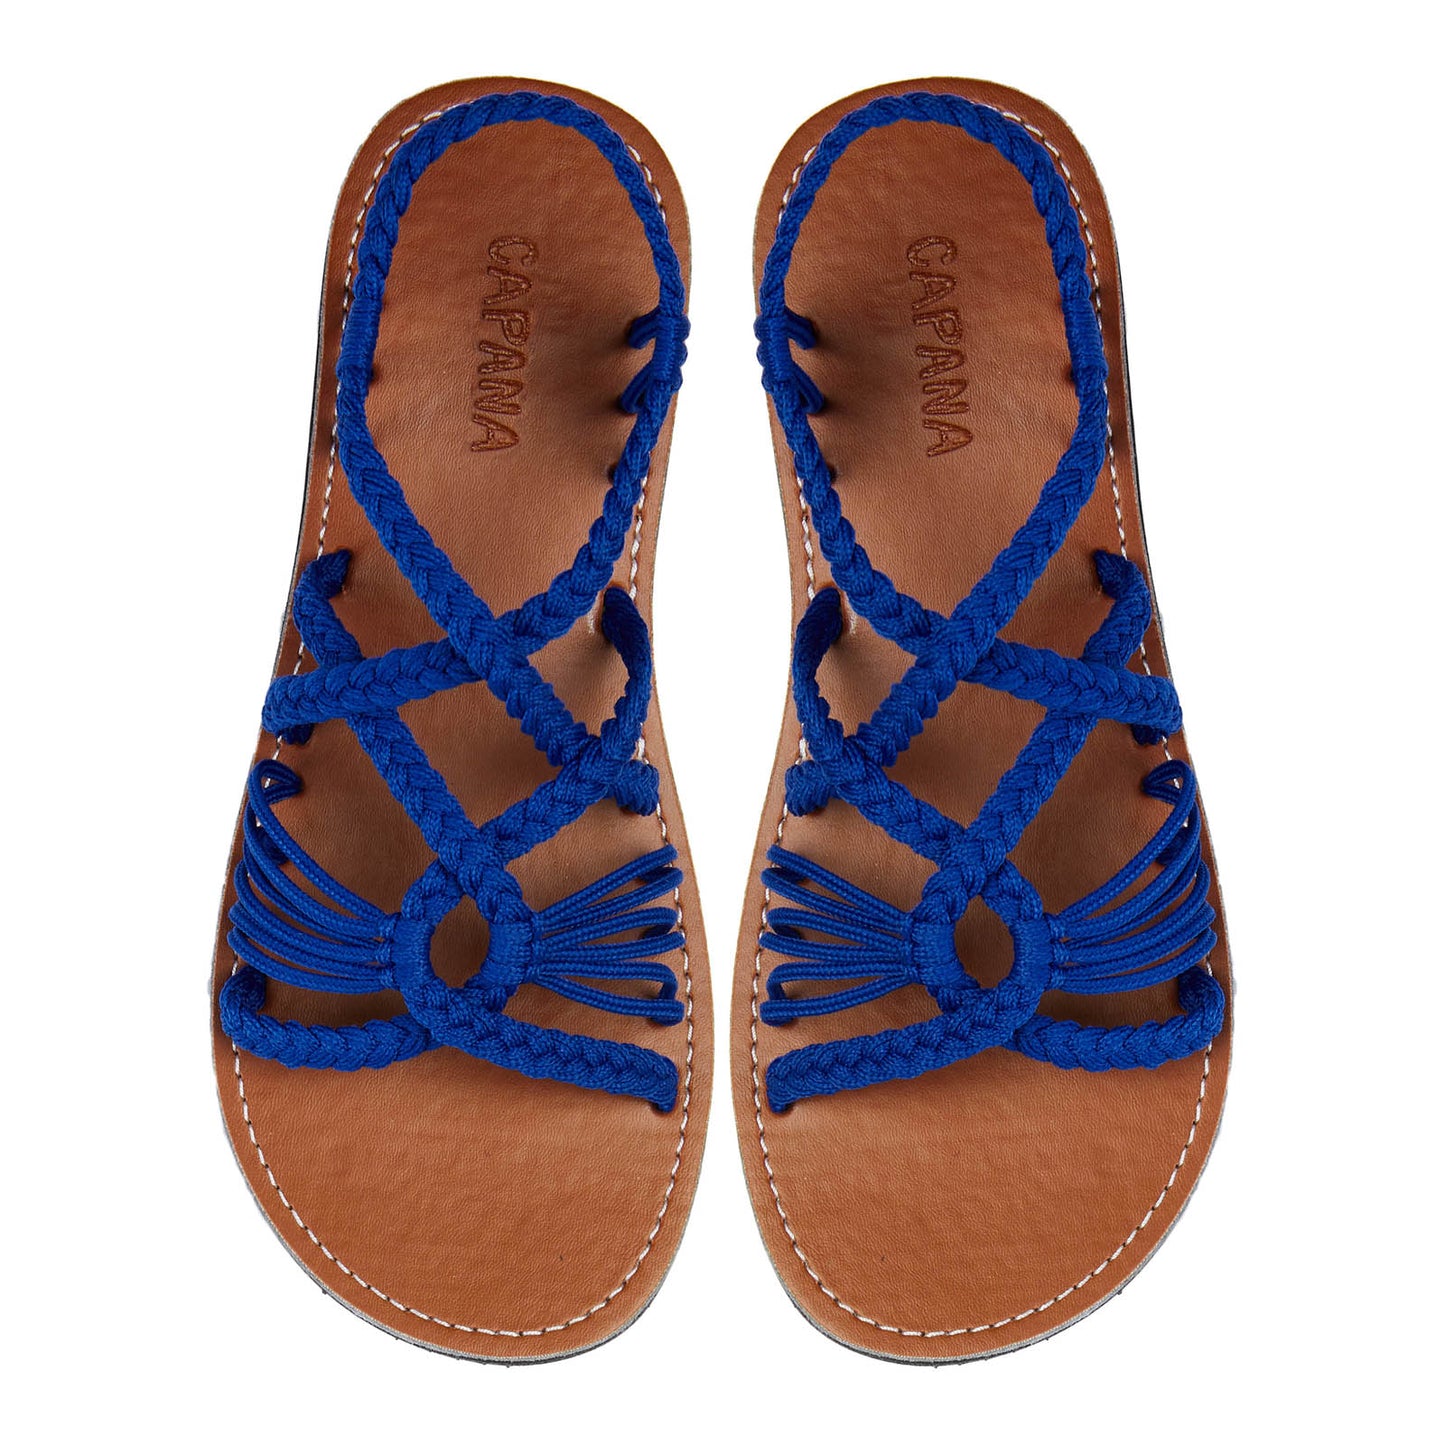 Relax Royal Blue Rope Sandals Navy Open toe wider design Flat Handmade sandals for women